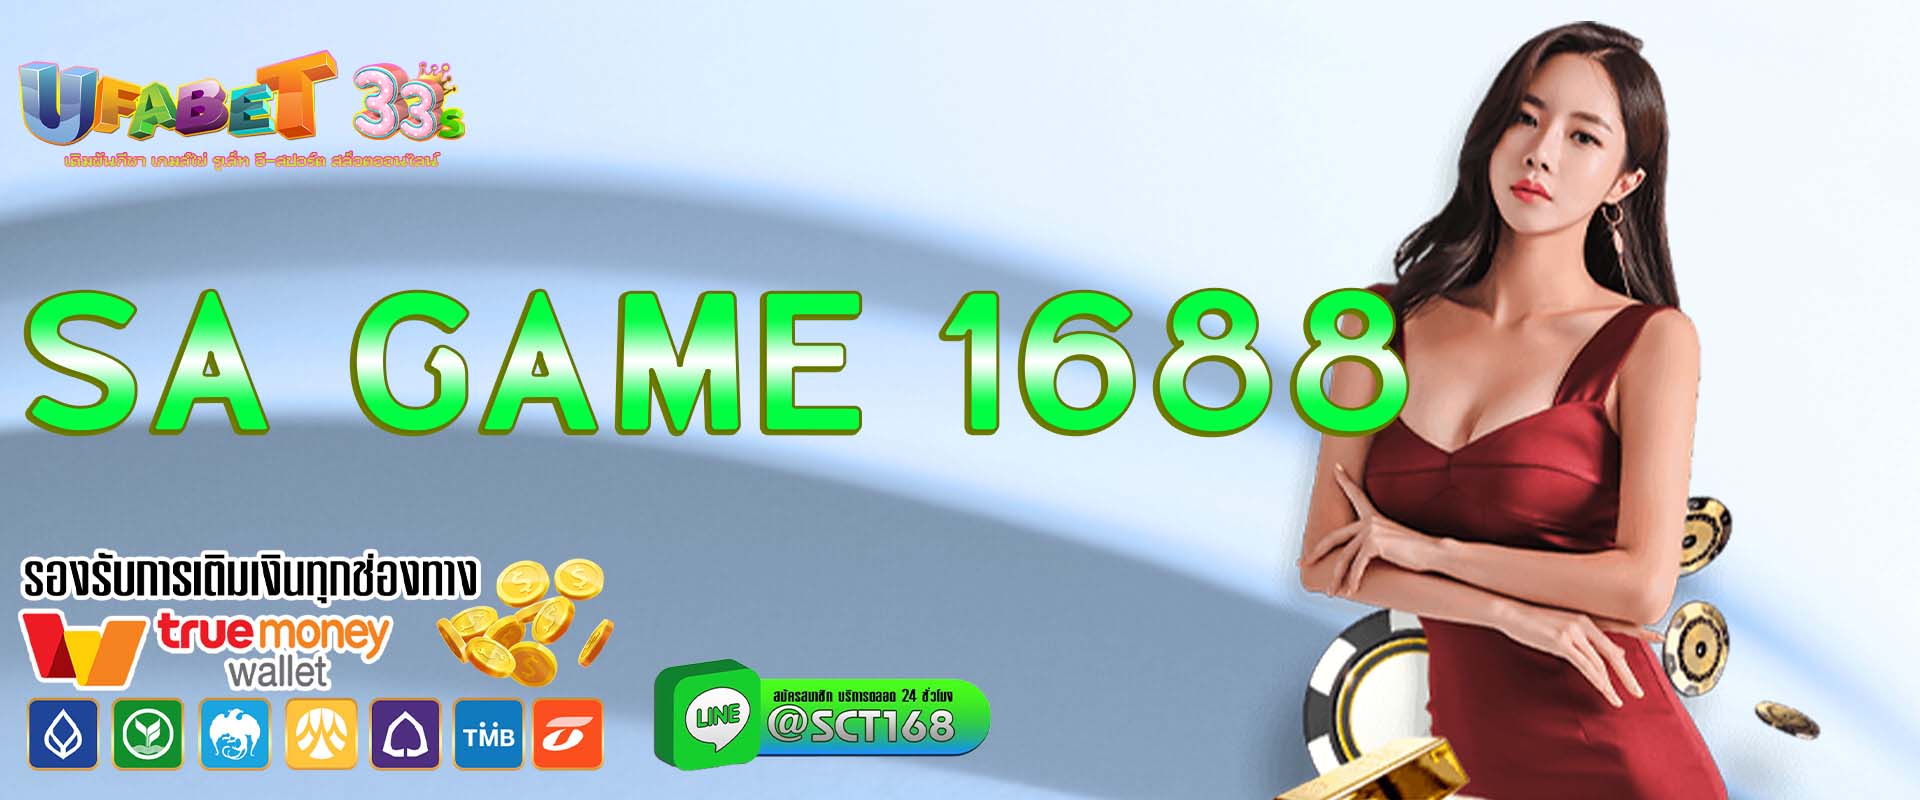 sa game 1688 เว็บตรง